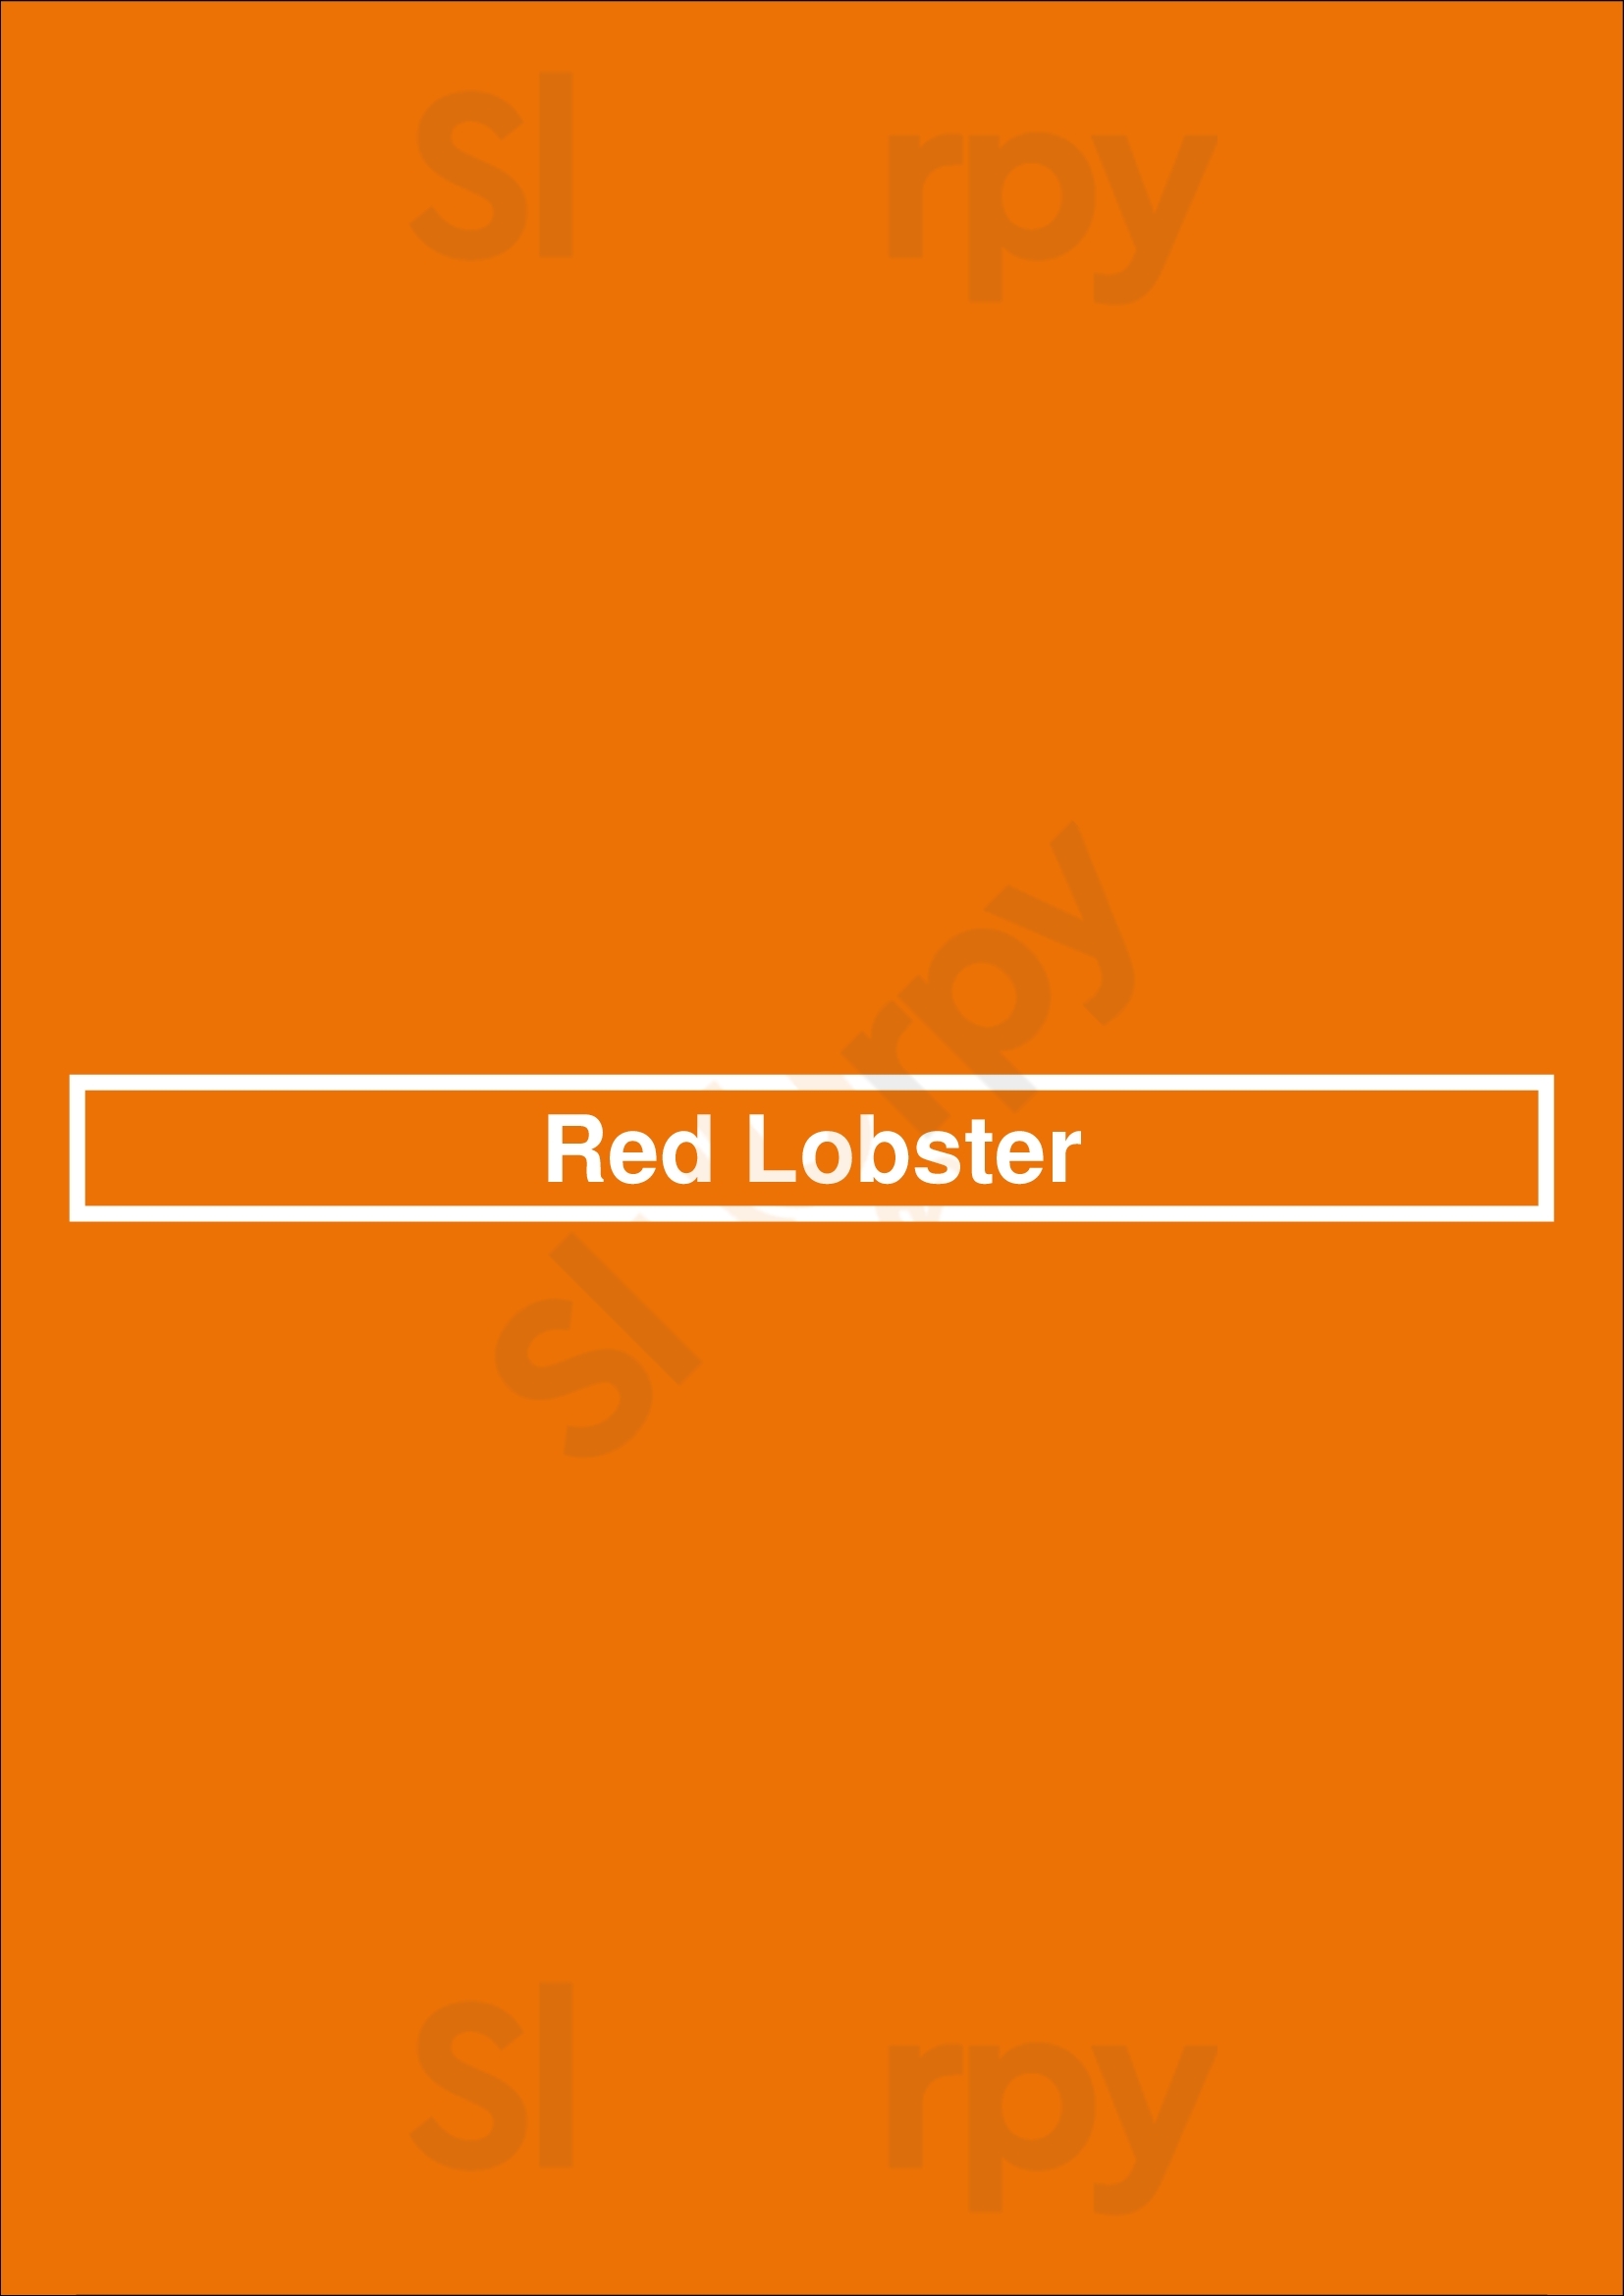 Red Lobster Cedar Rapids Menu - 1